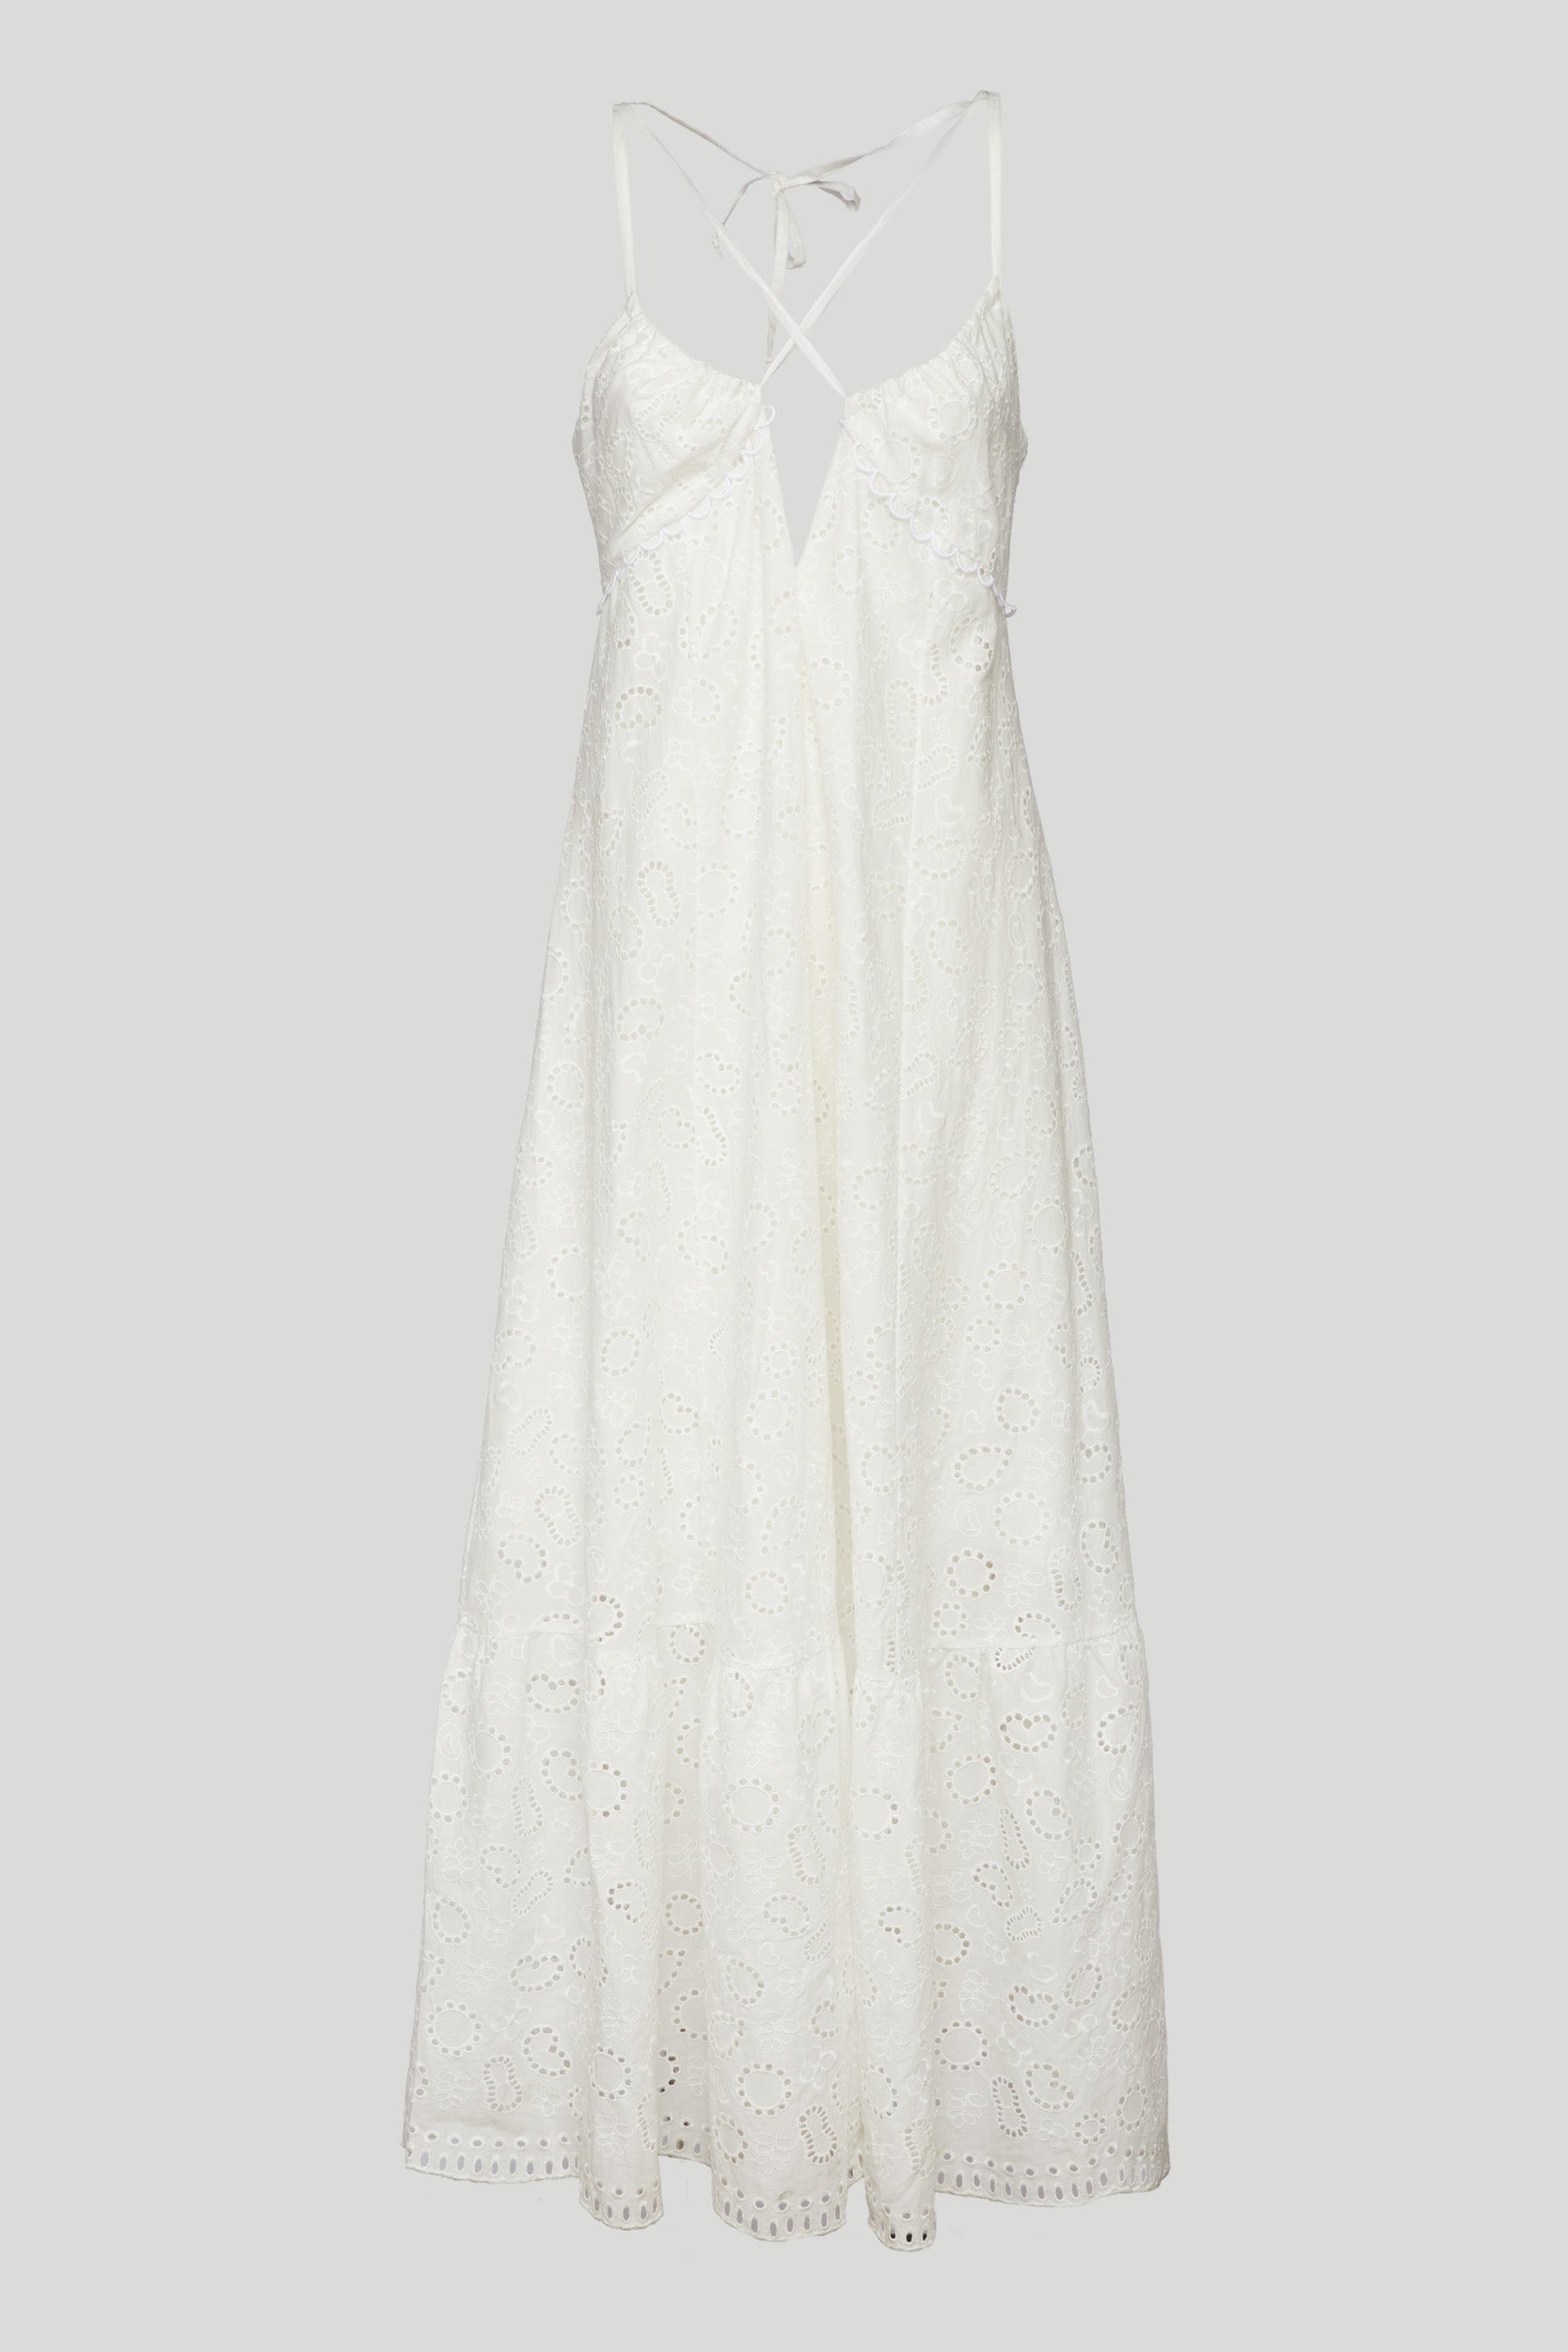 OTTOD'AME Long White Dress with Sangallo Lace